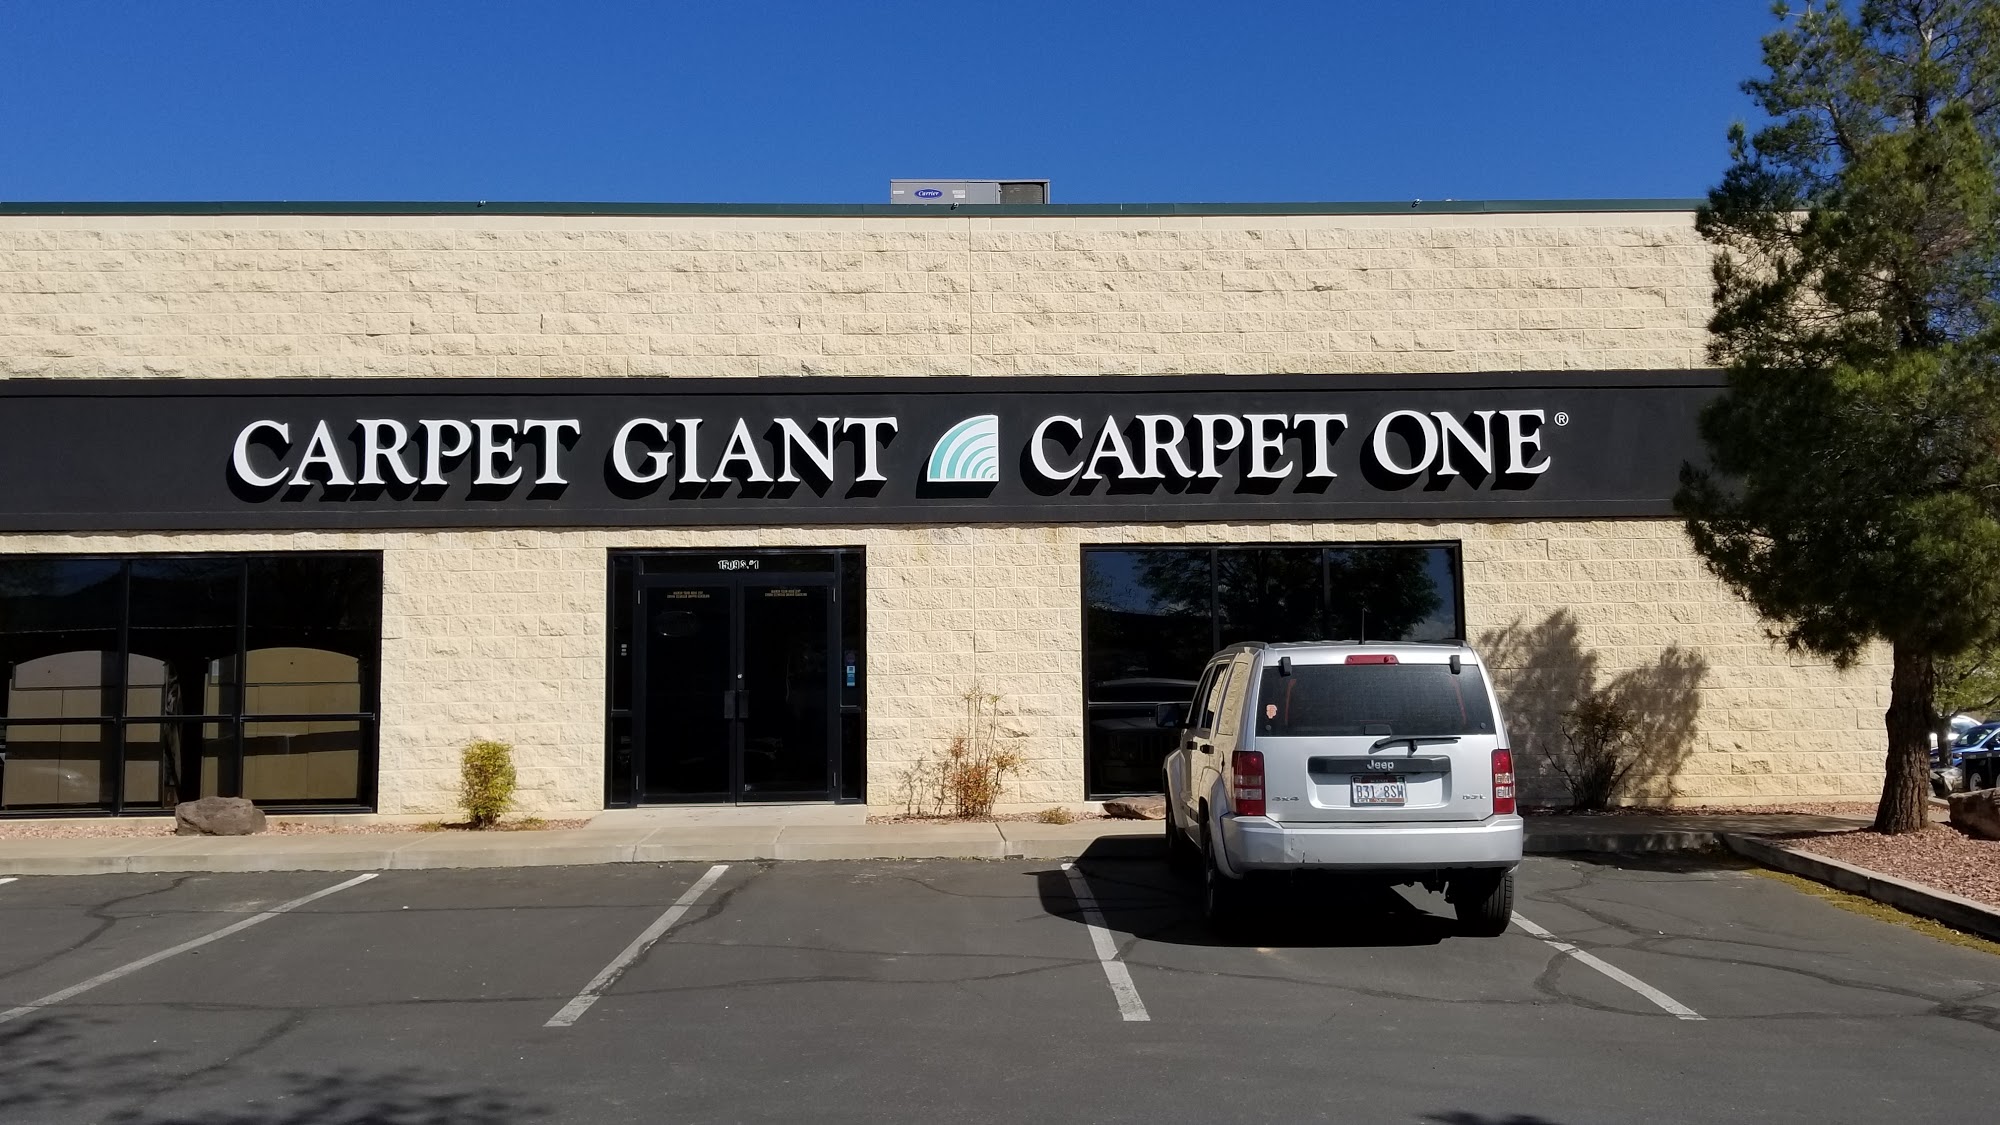 Giant Carpet One Floor & Home